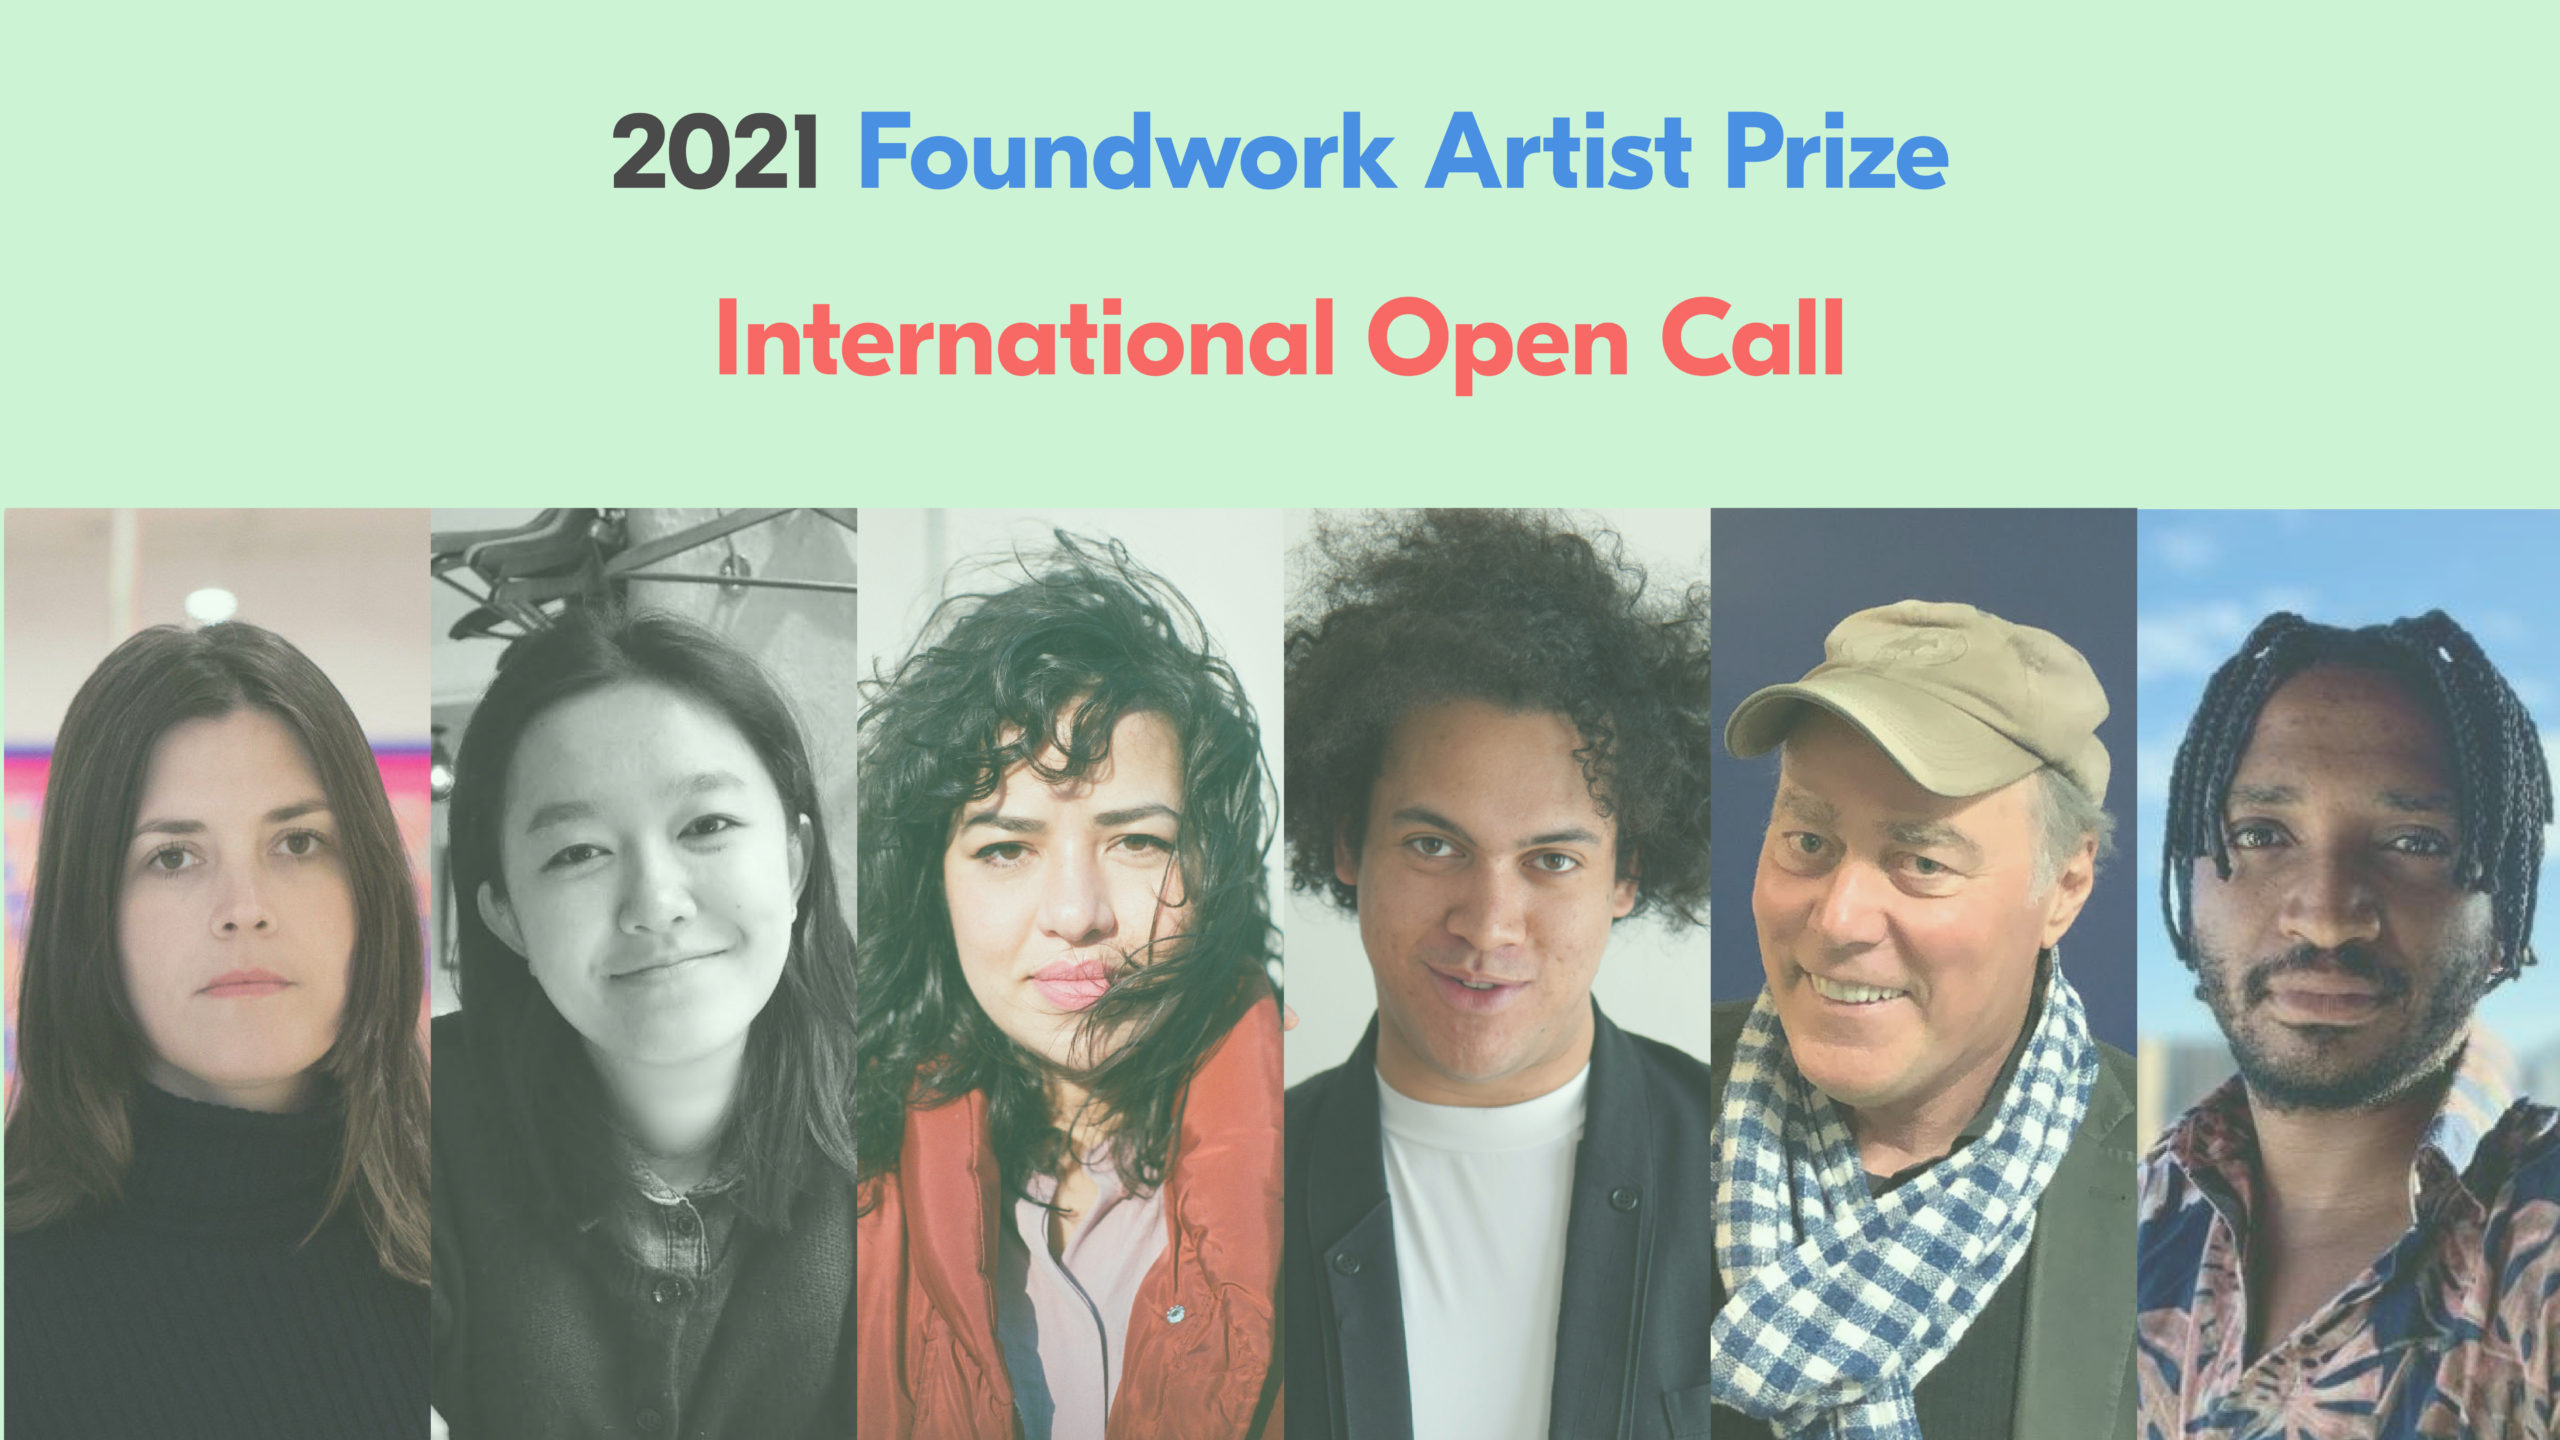 2021 FOUNDWORK ARTIST PRIZE — International Open Call